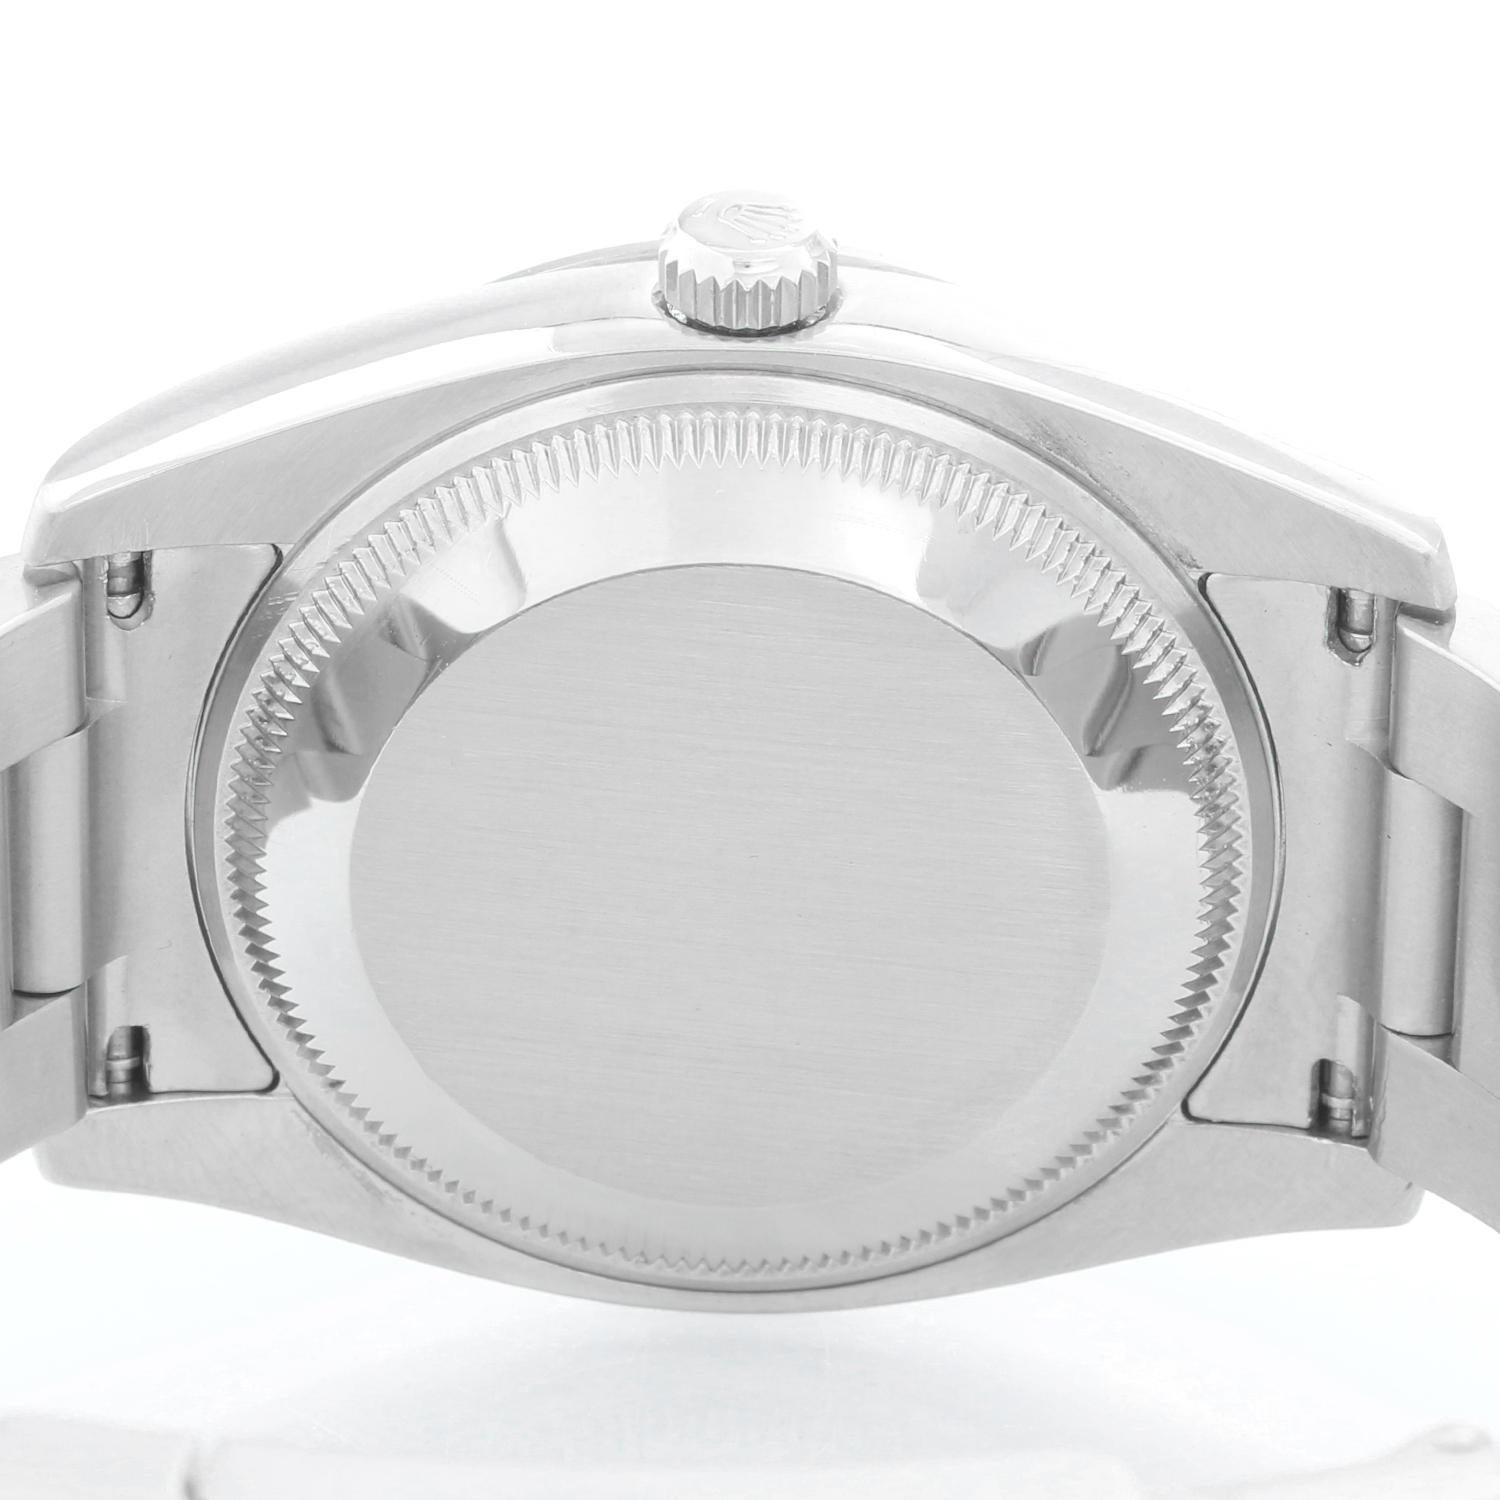 Rolex Air-King Men's Stainless Steel Watch 114200 1